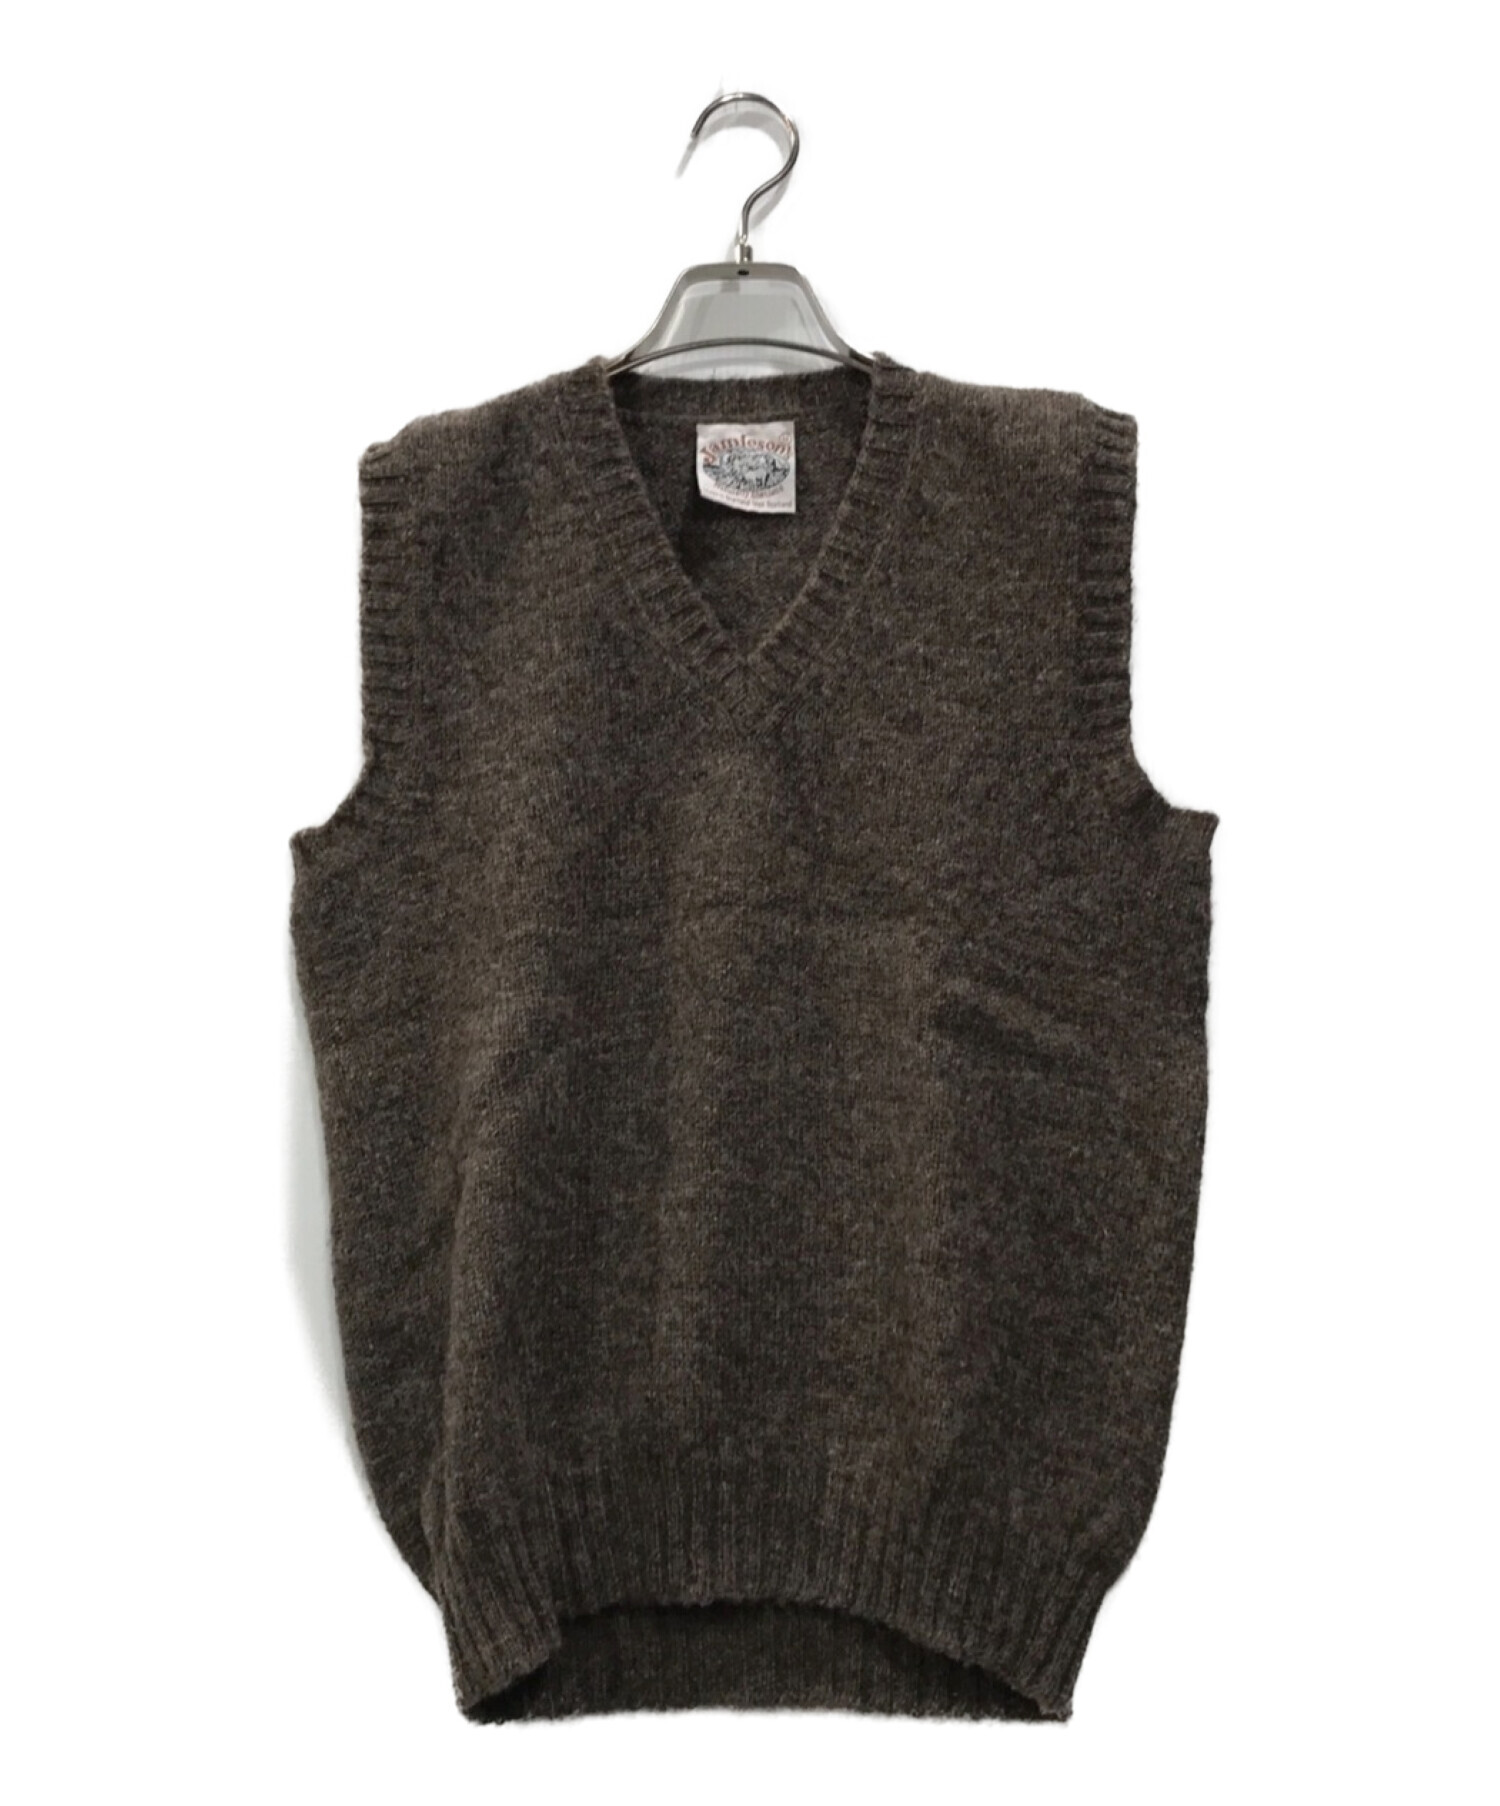 Jamieson’s Knitwear (ジャミーソンズニットウェア) Shetland Wool Sweater Vest ブラウン サイズ:M